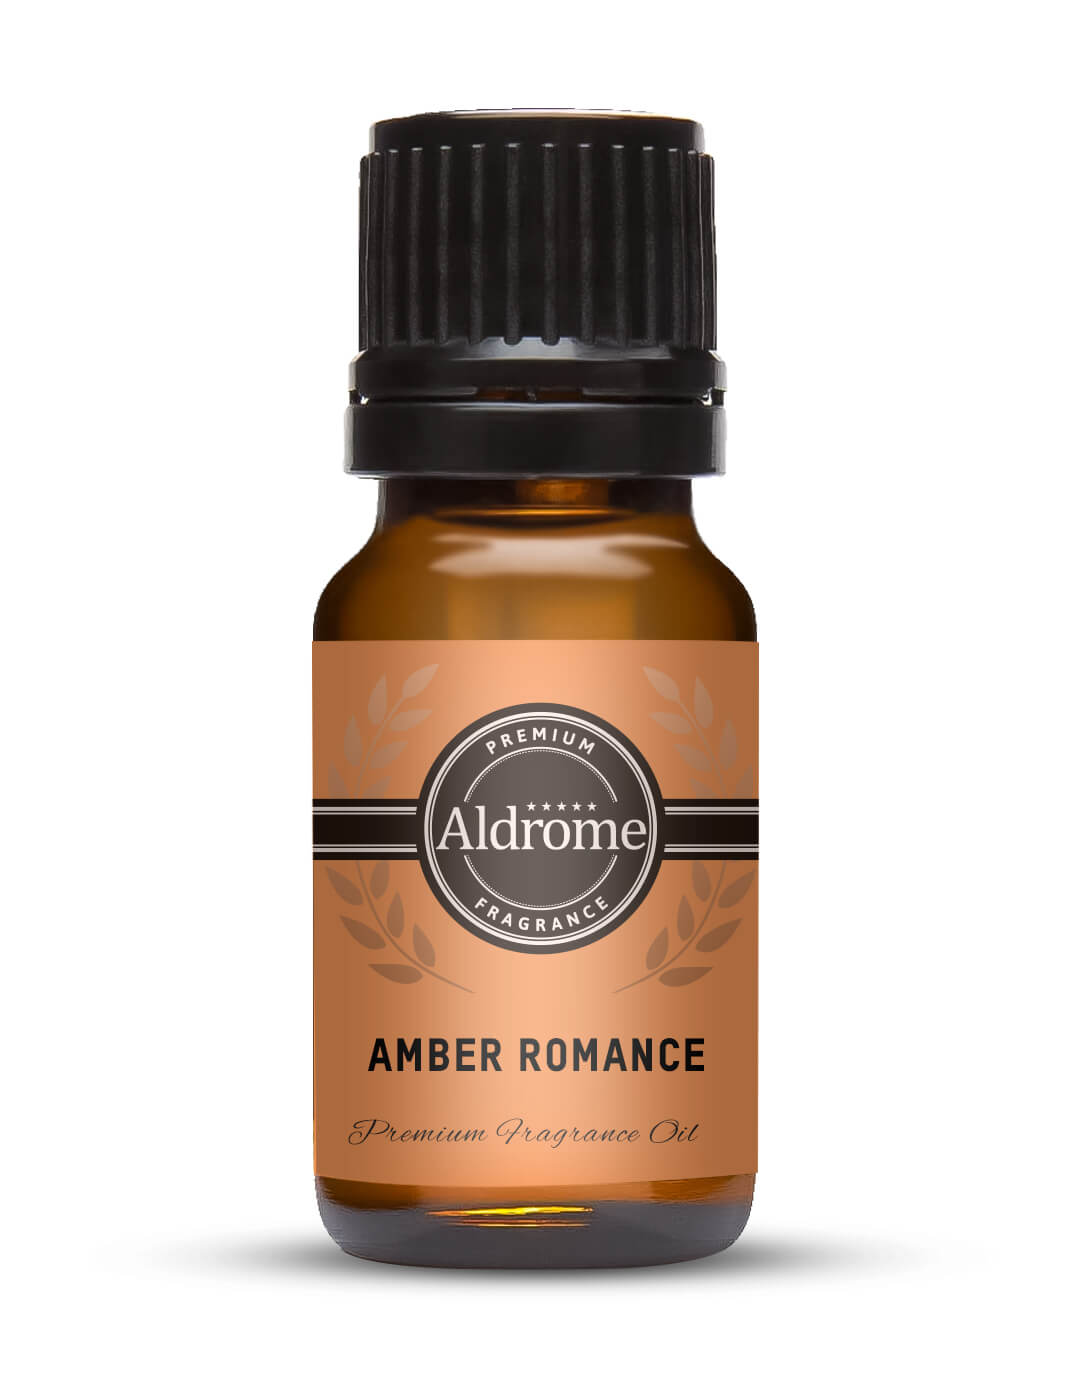 Buy Amber Romance Fragrance Oil - 10ml | Aldrome Premium Fragrance Oil